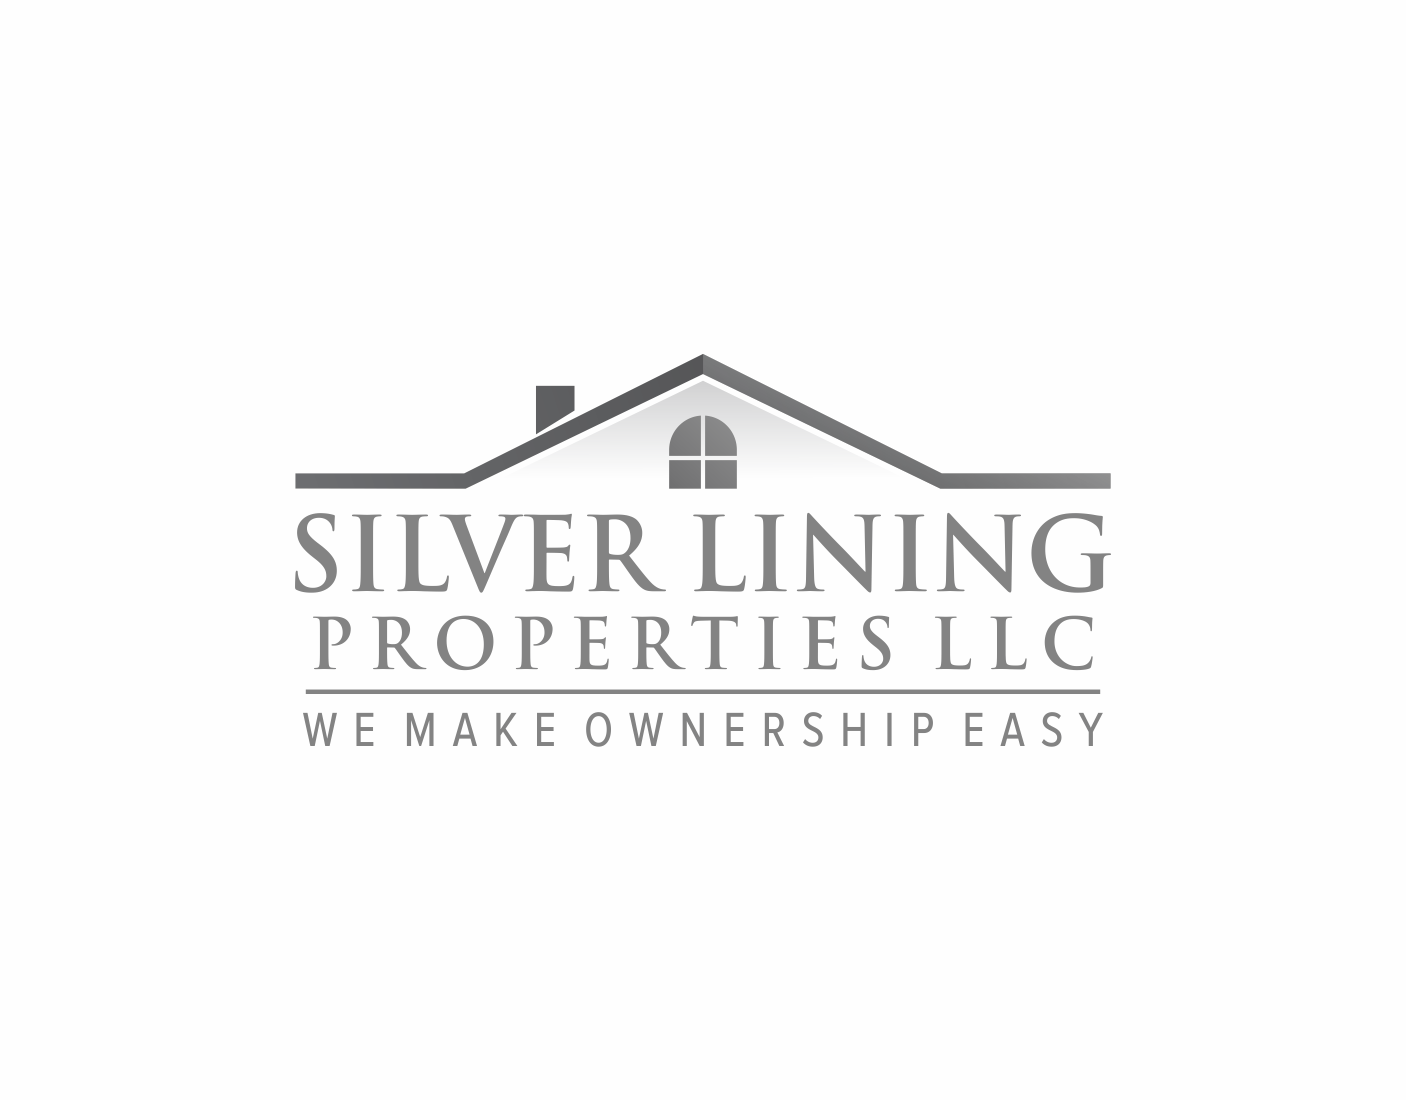 Lining Logo - Logo Design #163 | 'Silver Lining Properties LLC' design project ...